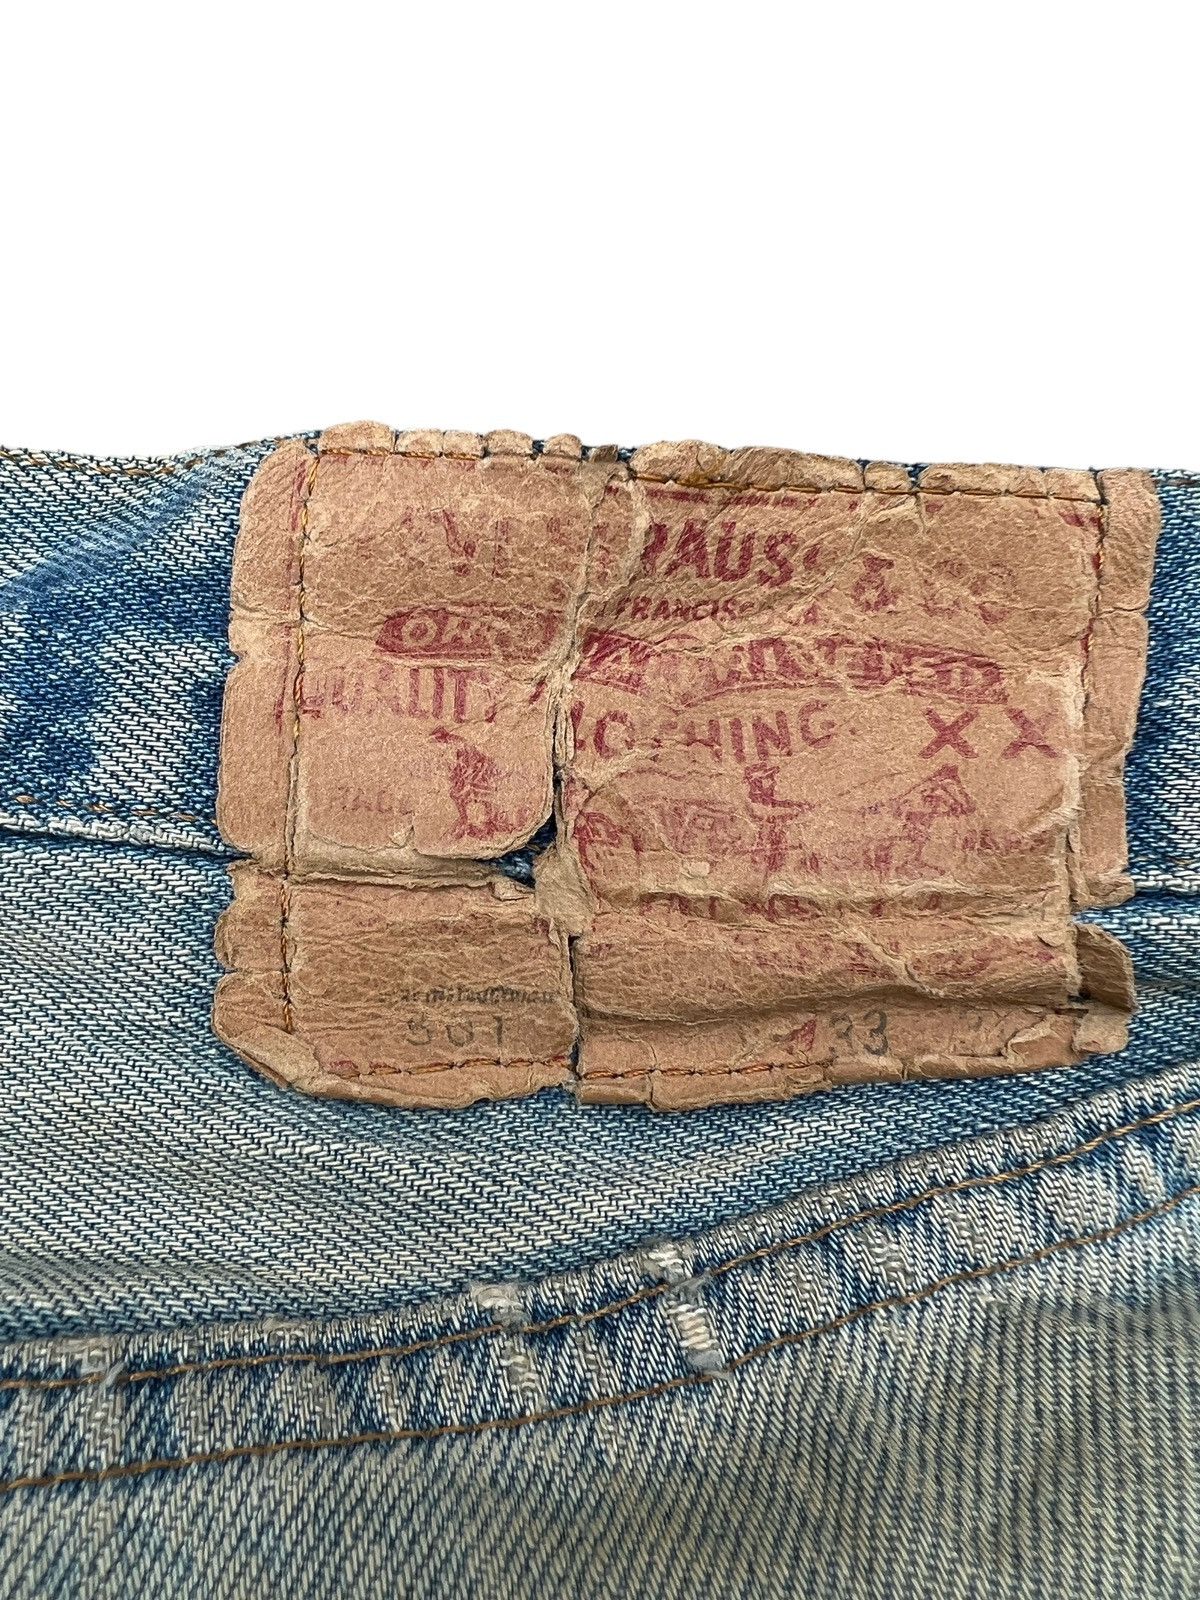 Vintage 70s Levi’s 501 Selvedge Distressed Denim Jeans 32x31 - 15